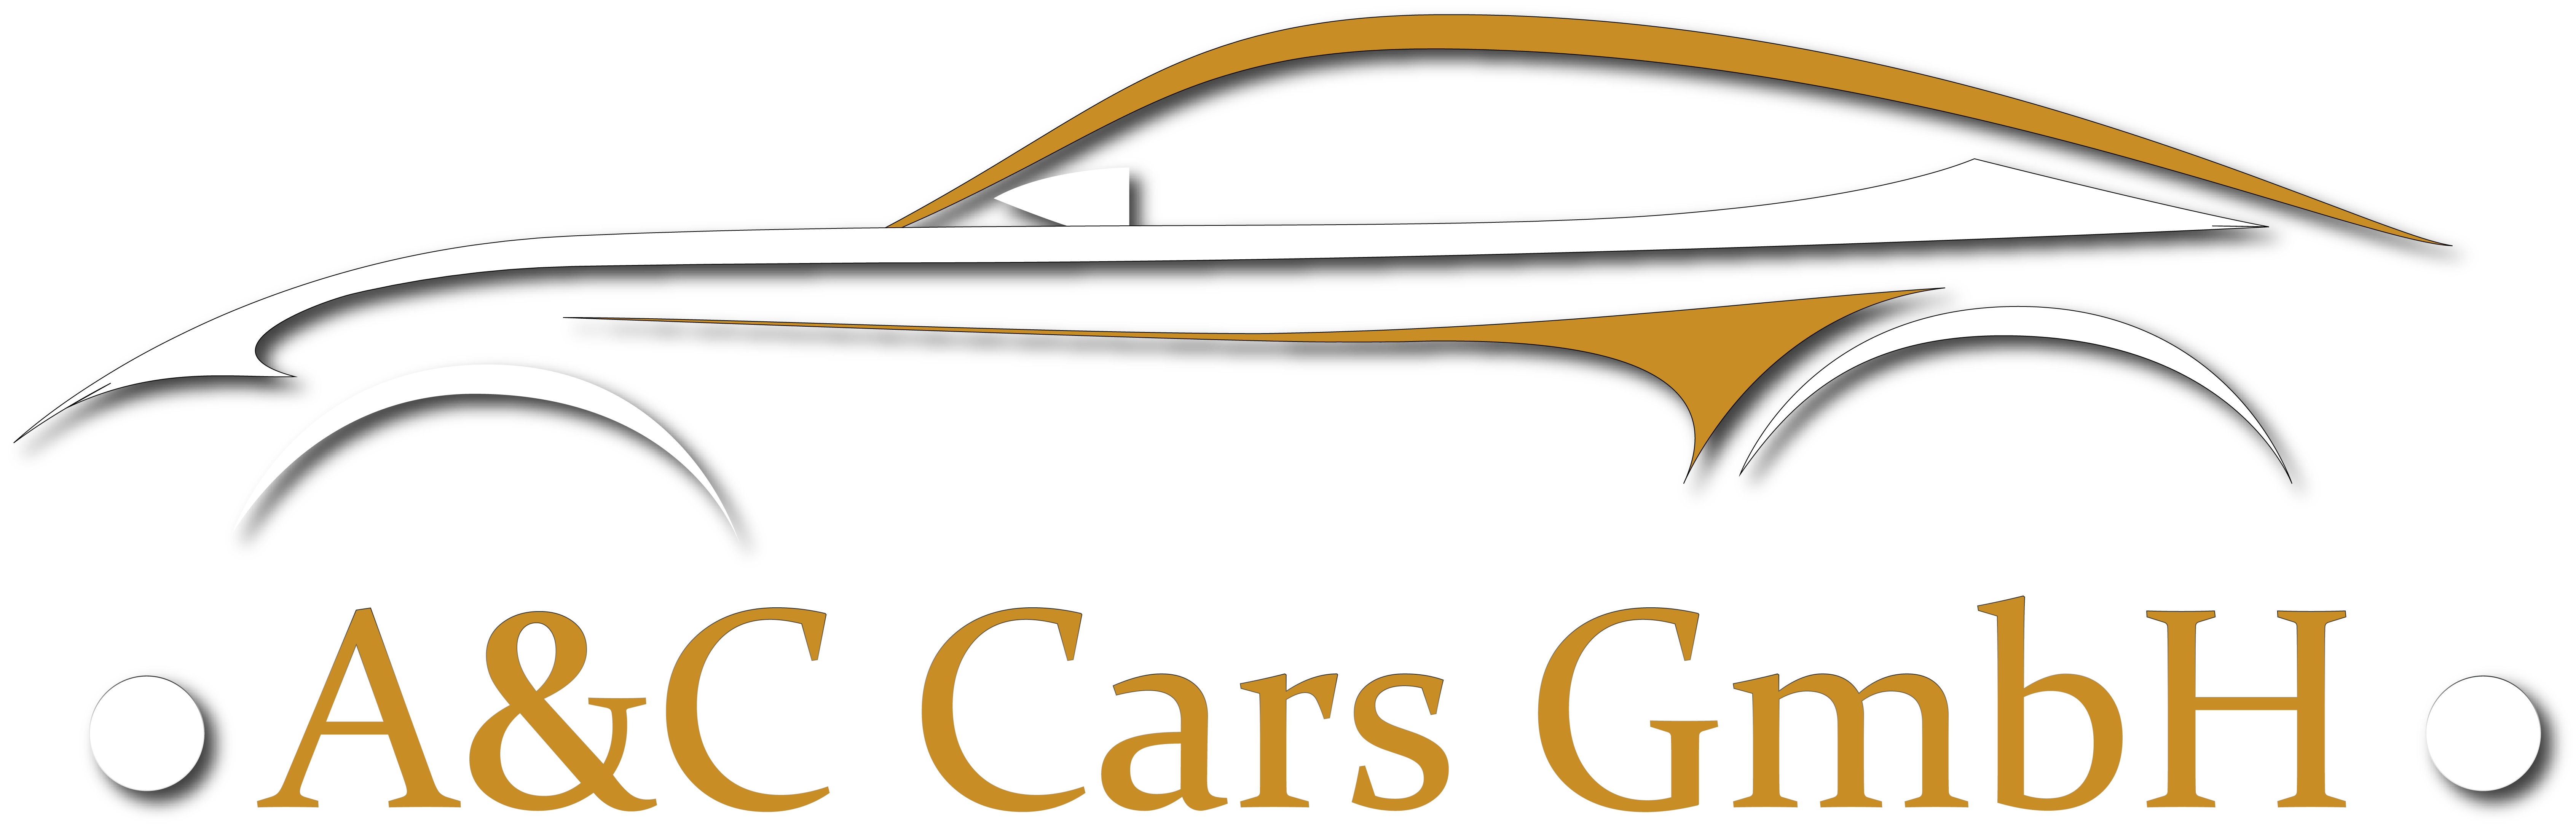 A&C CARS-logo-CustomerFeedback005